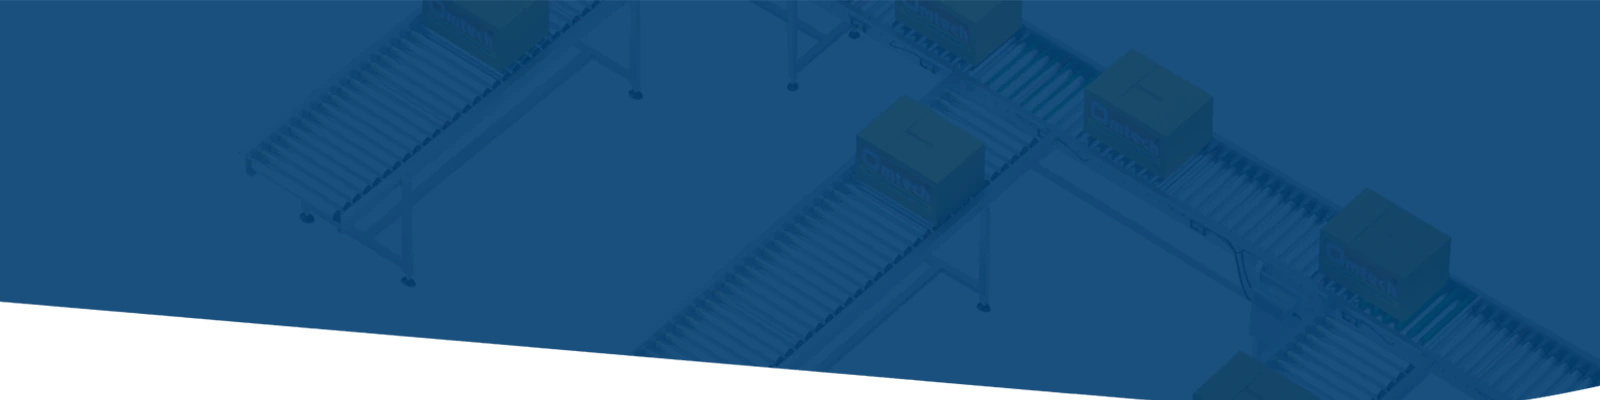 Conveyor Belt System